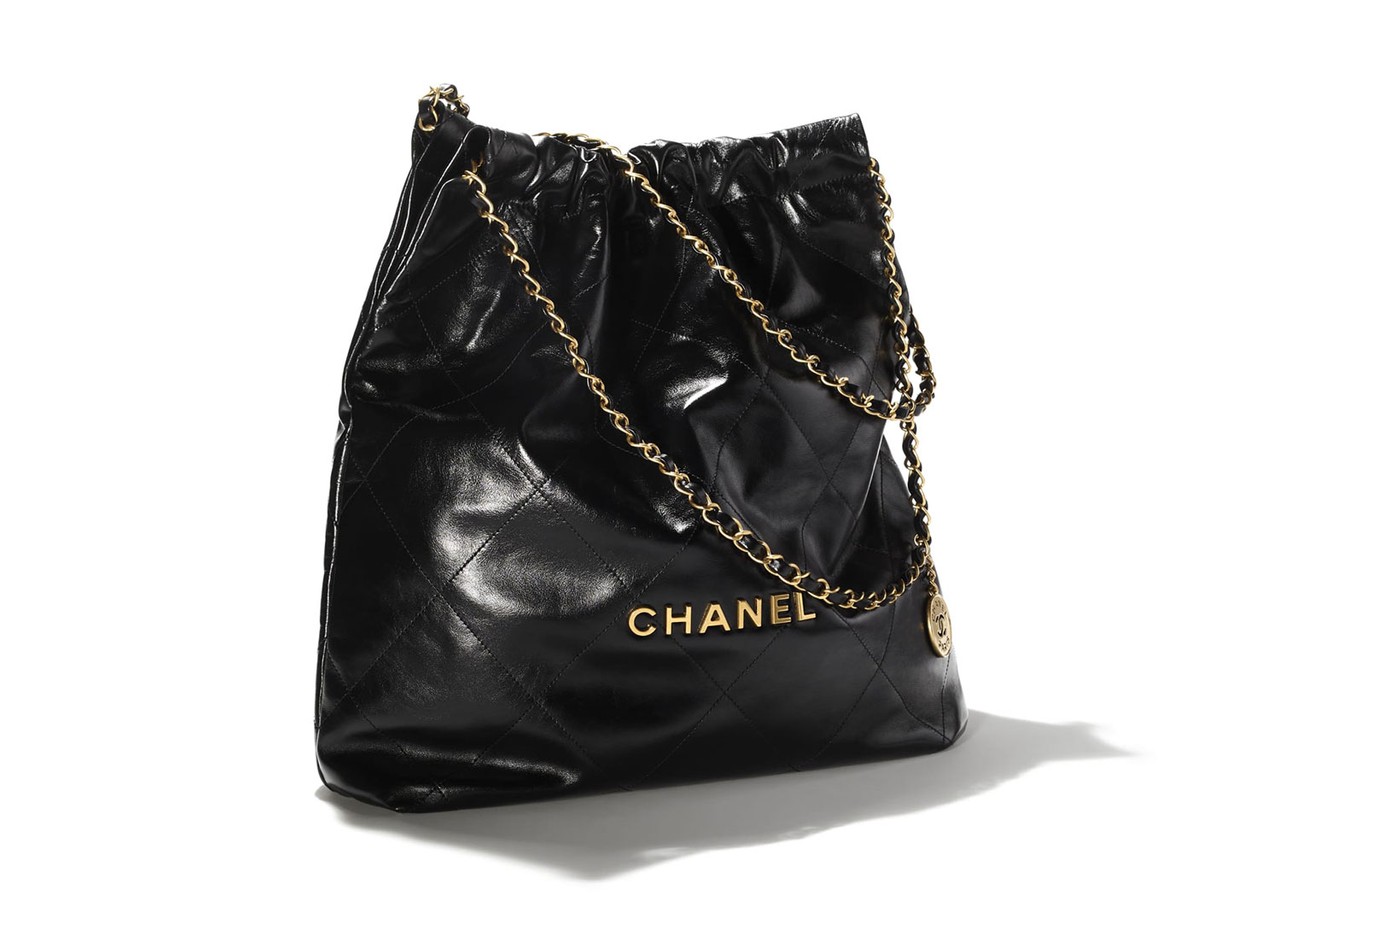 Виржини Виар представила новую сумку Chanel (фото 4)